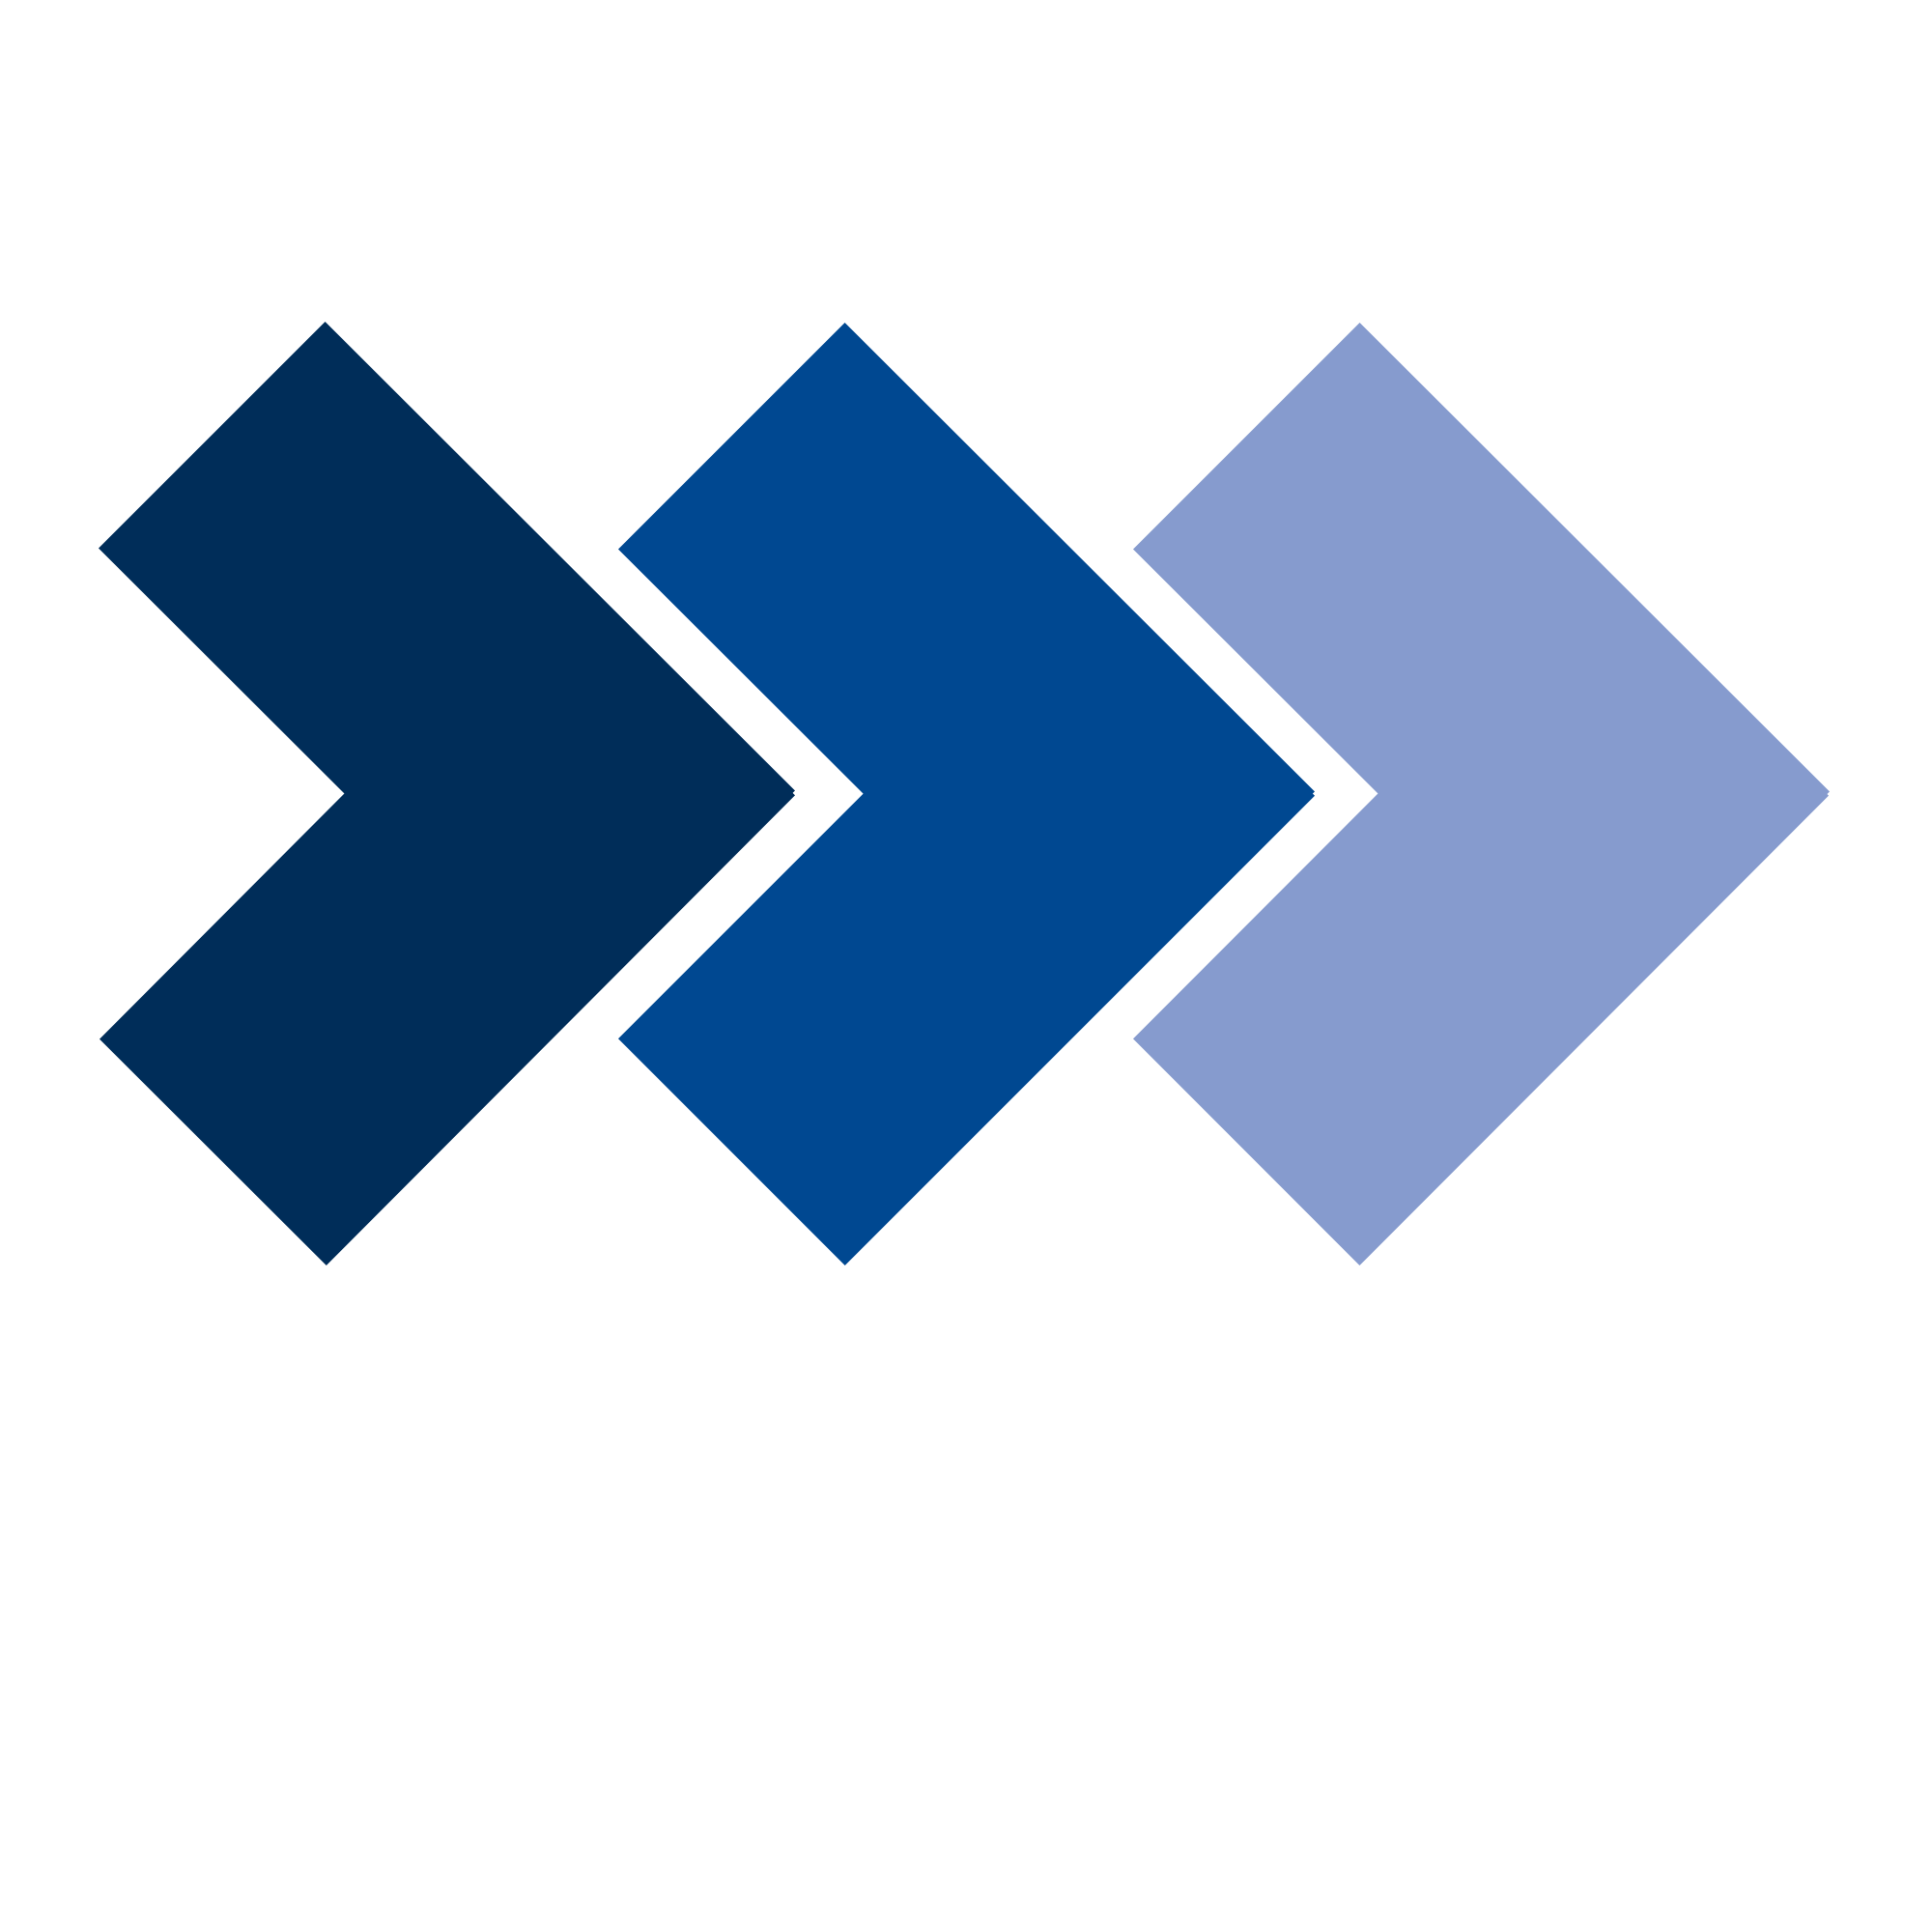 Strategsys logo square